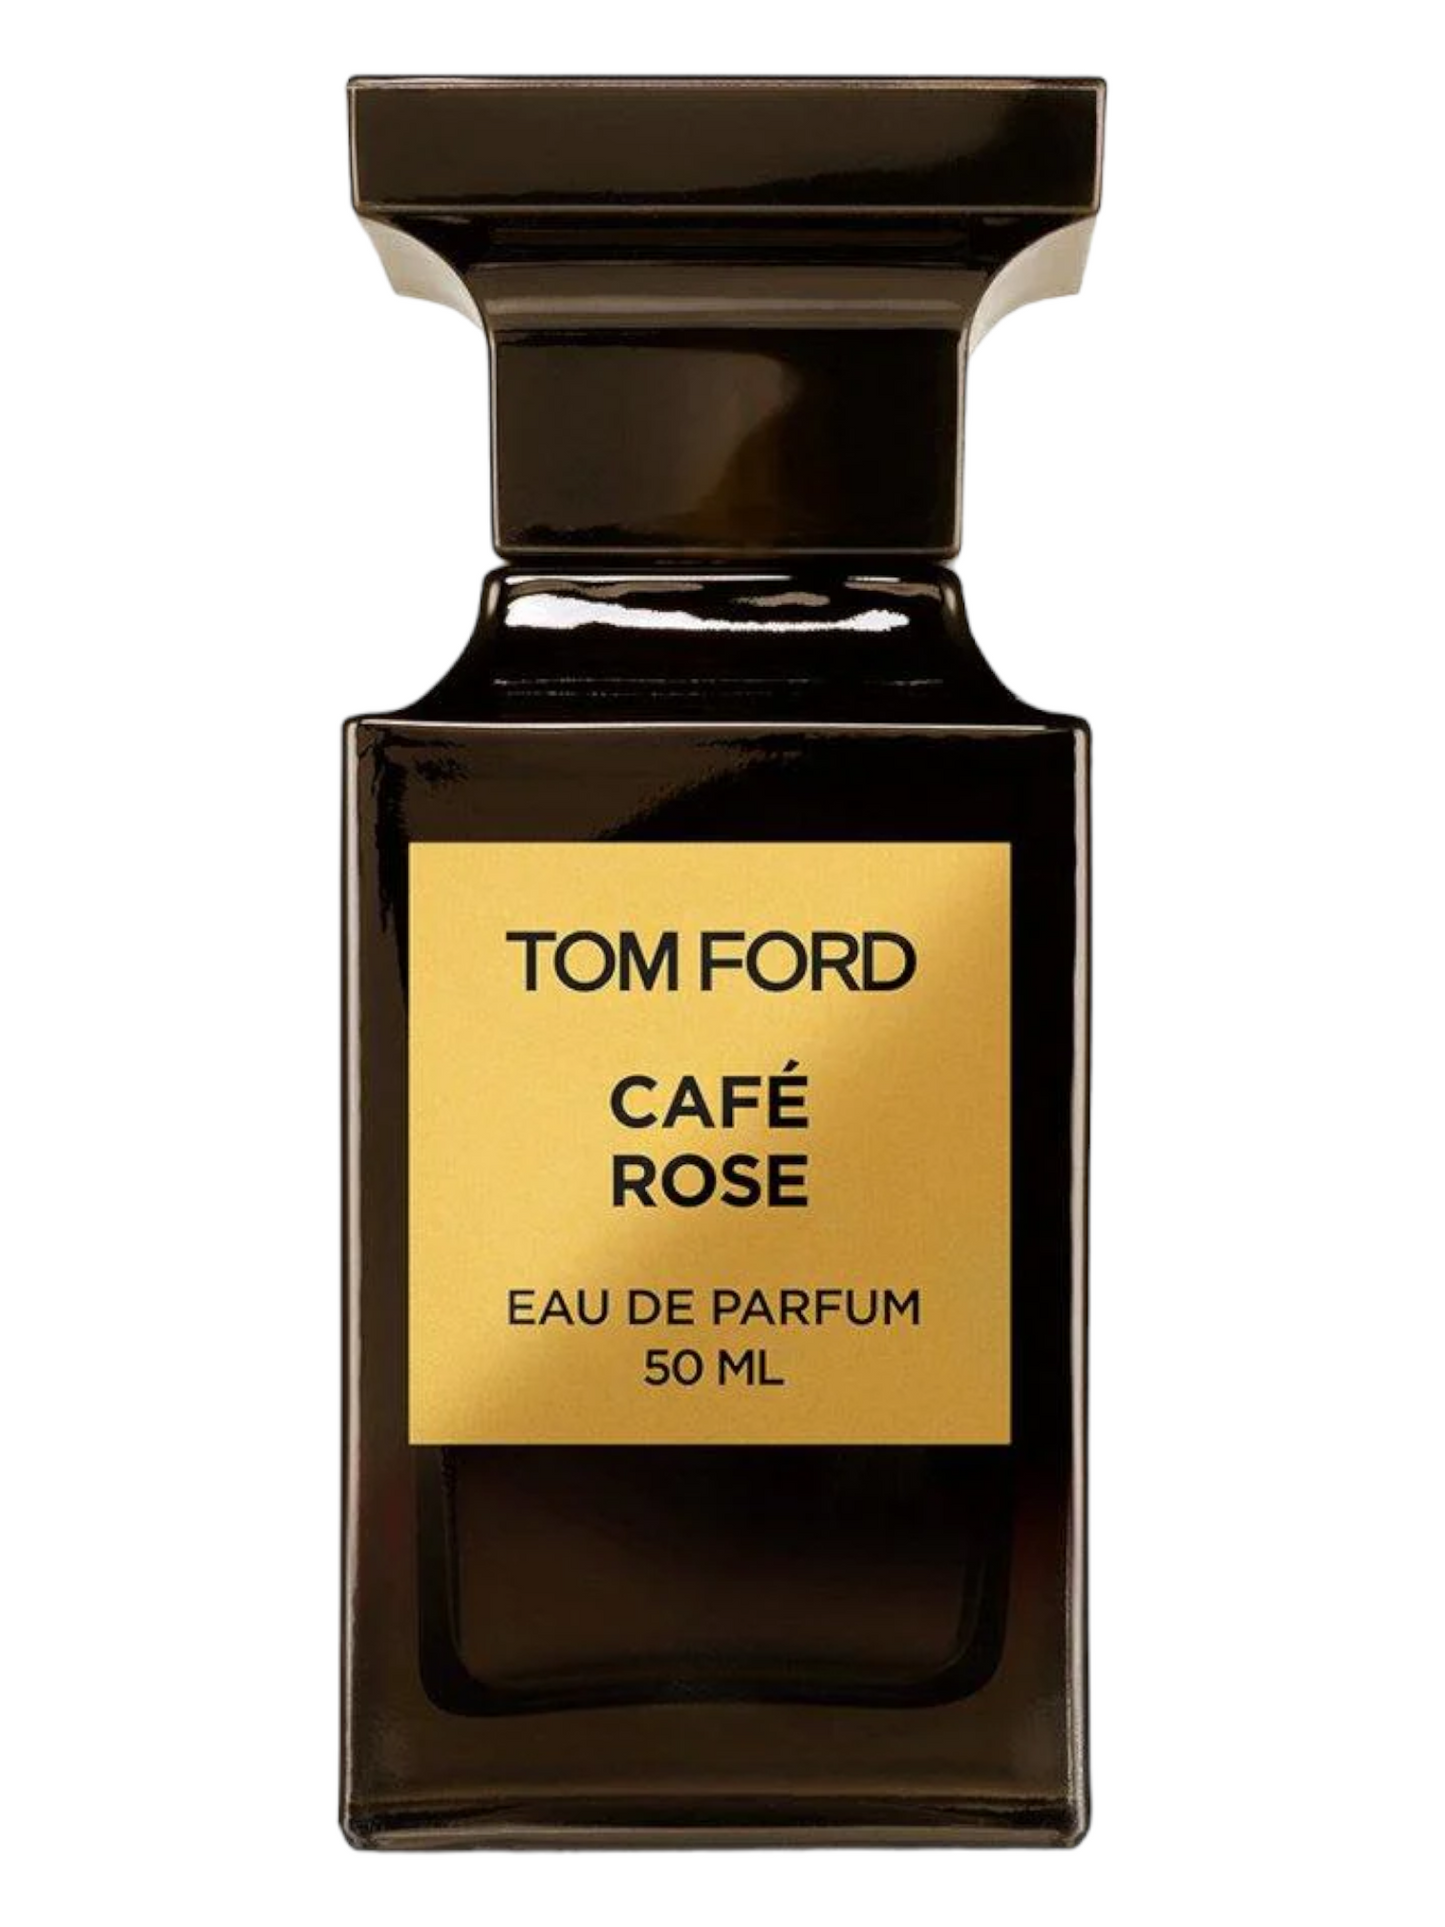 Tom Ford Cafe Rose Eau De Parfum EDP 50ml Brand New Unboxed